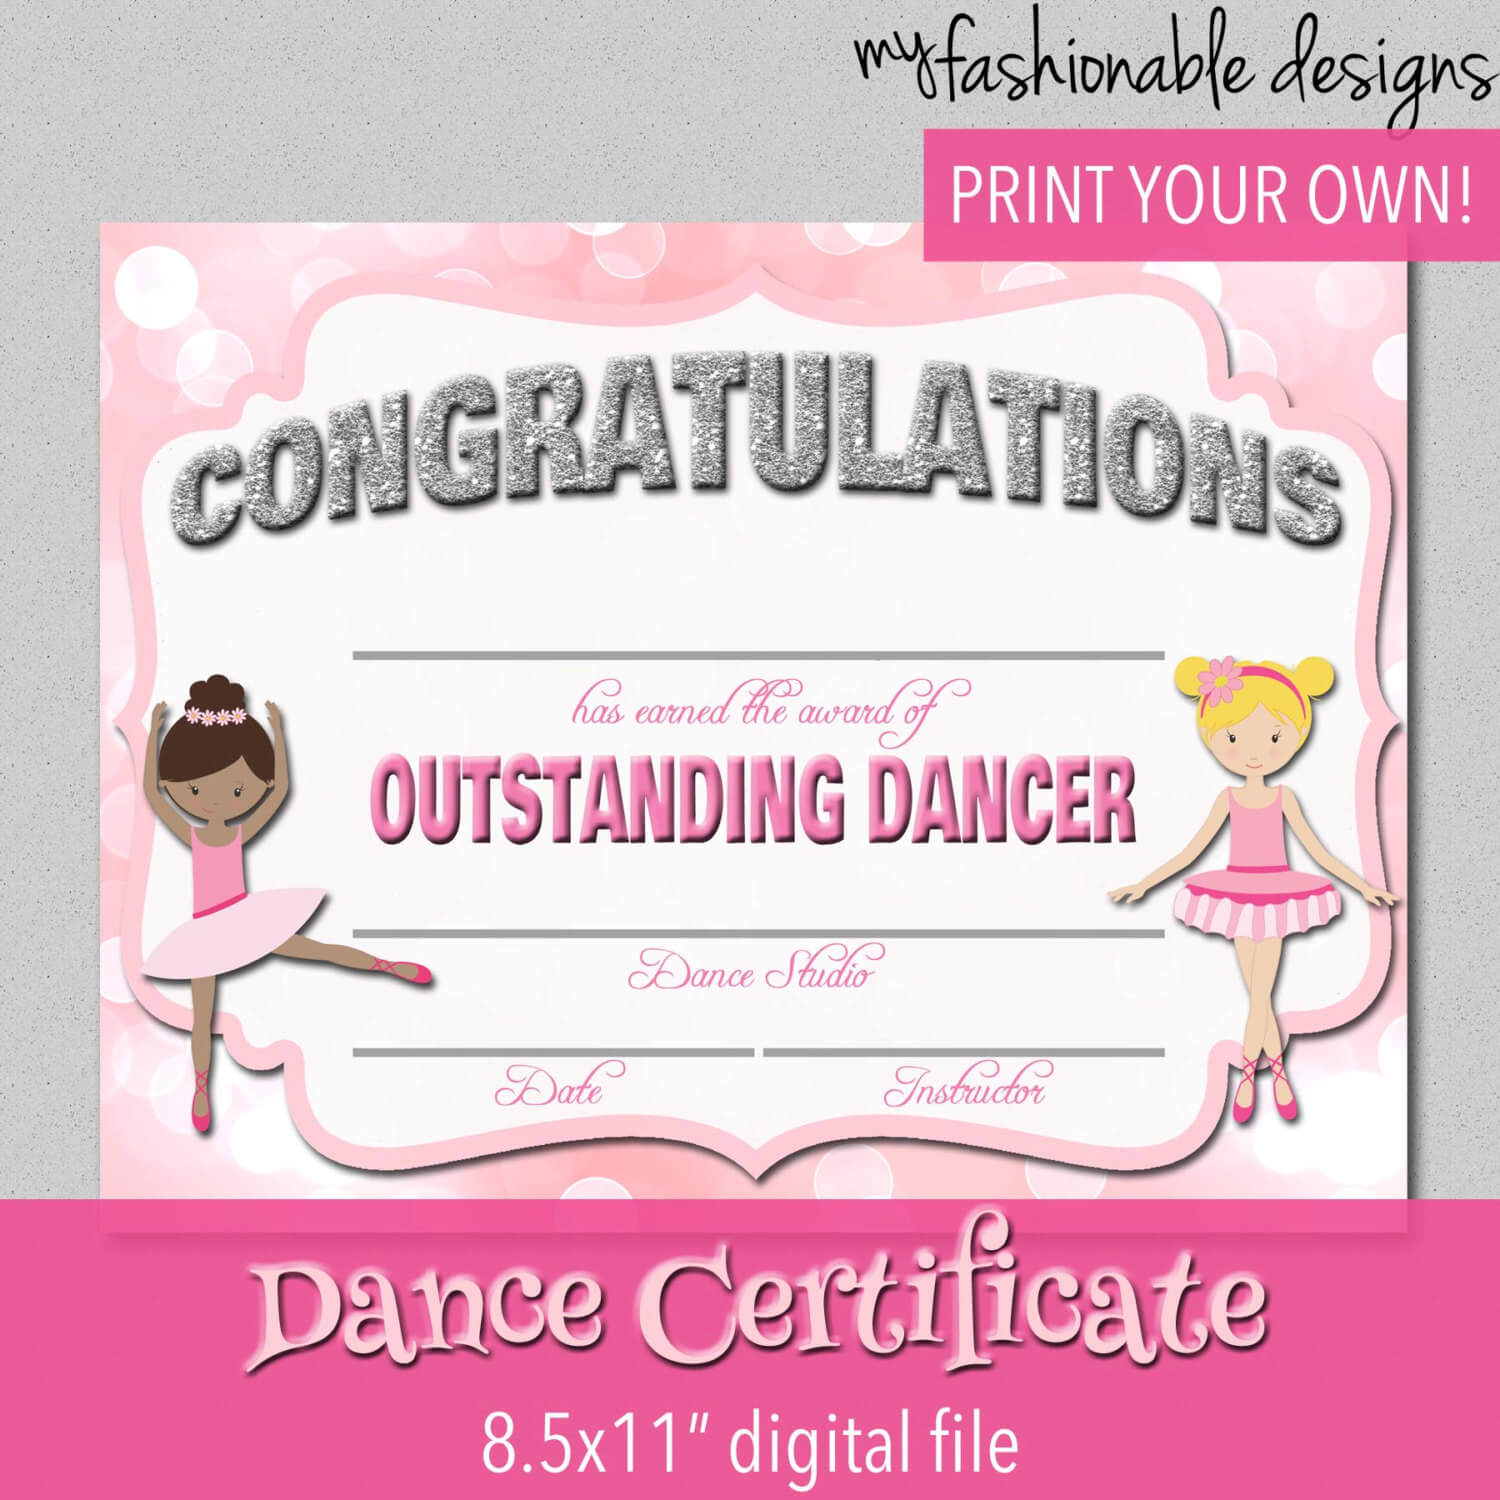 Certificate Templates: Free Dance Certificate Template For Dance Certificate Template